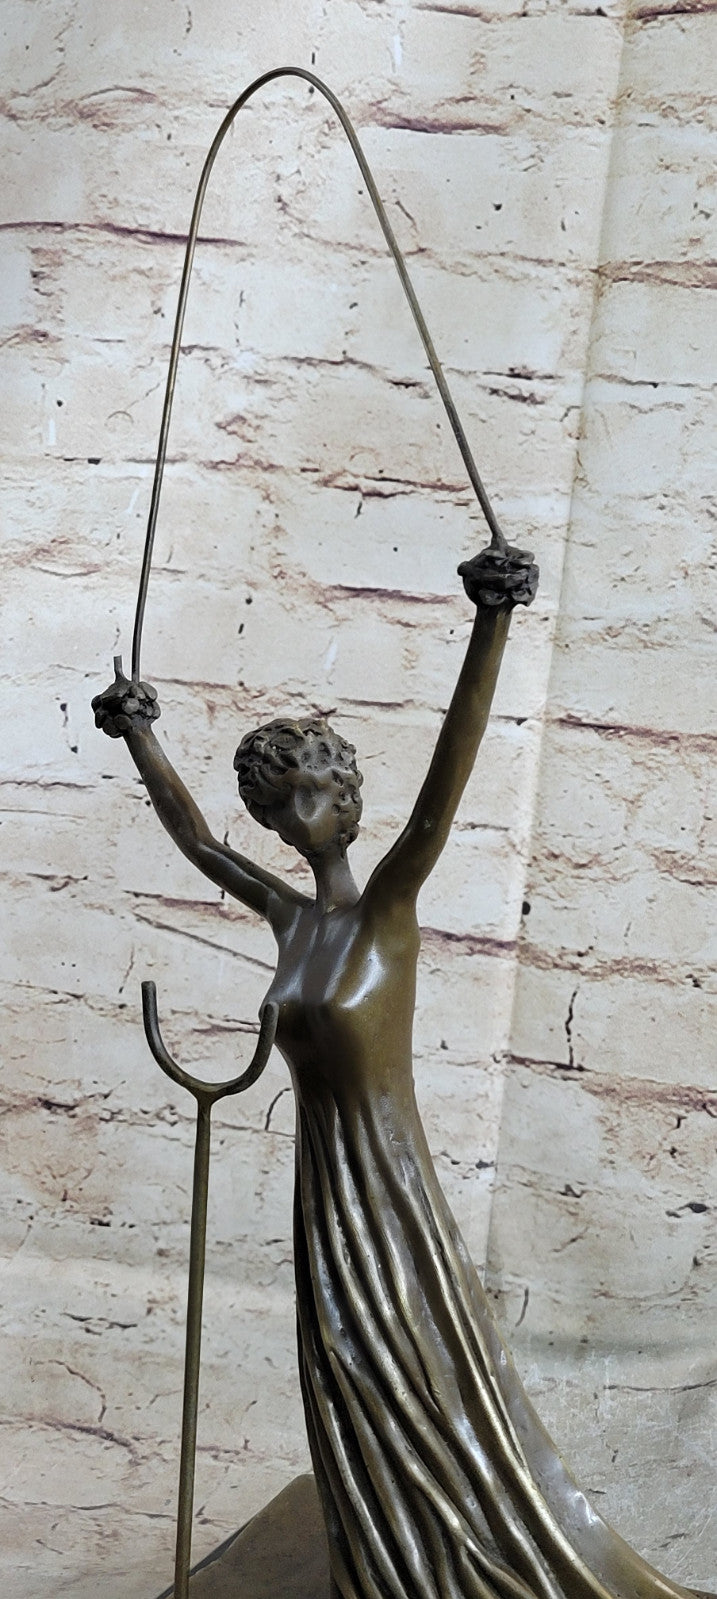 Salvador Dali Entitled Alice in Wonderland Bronze Sculpture Made by Lost Wax ART